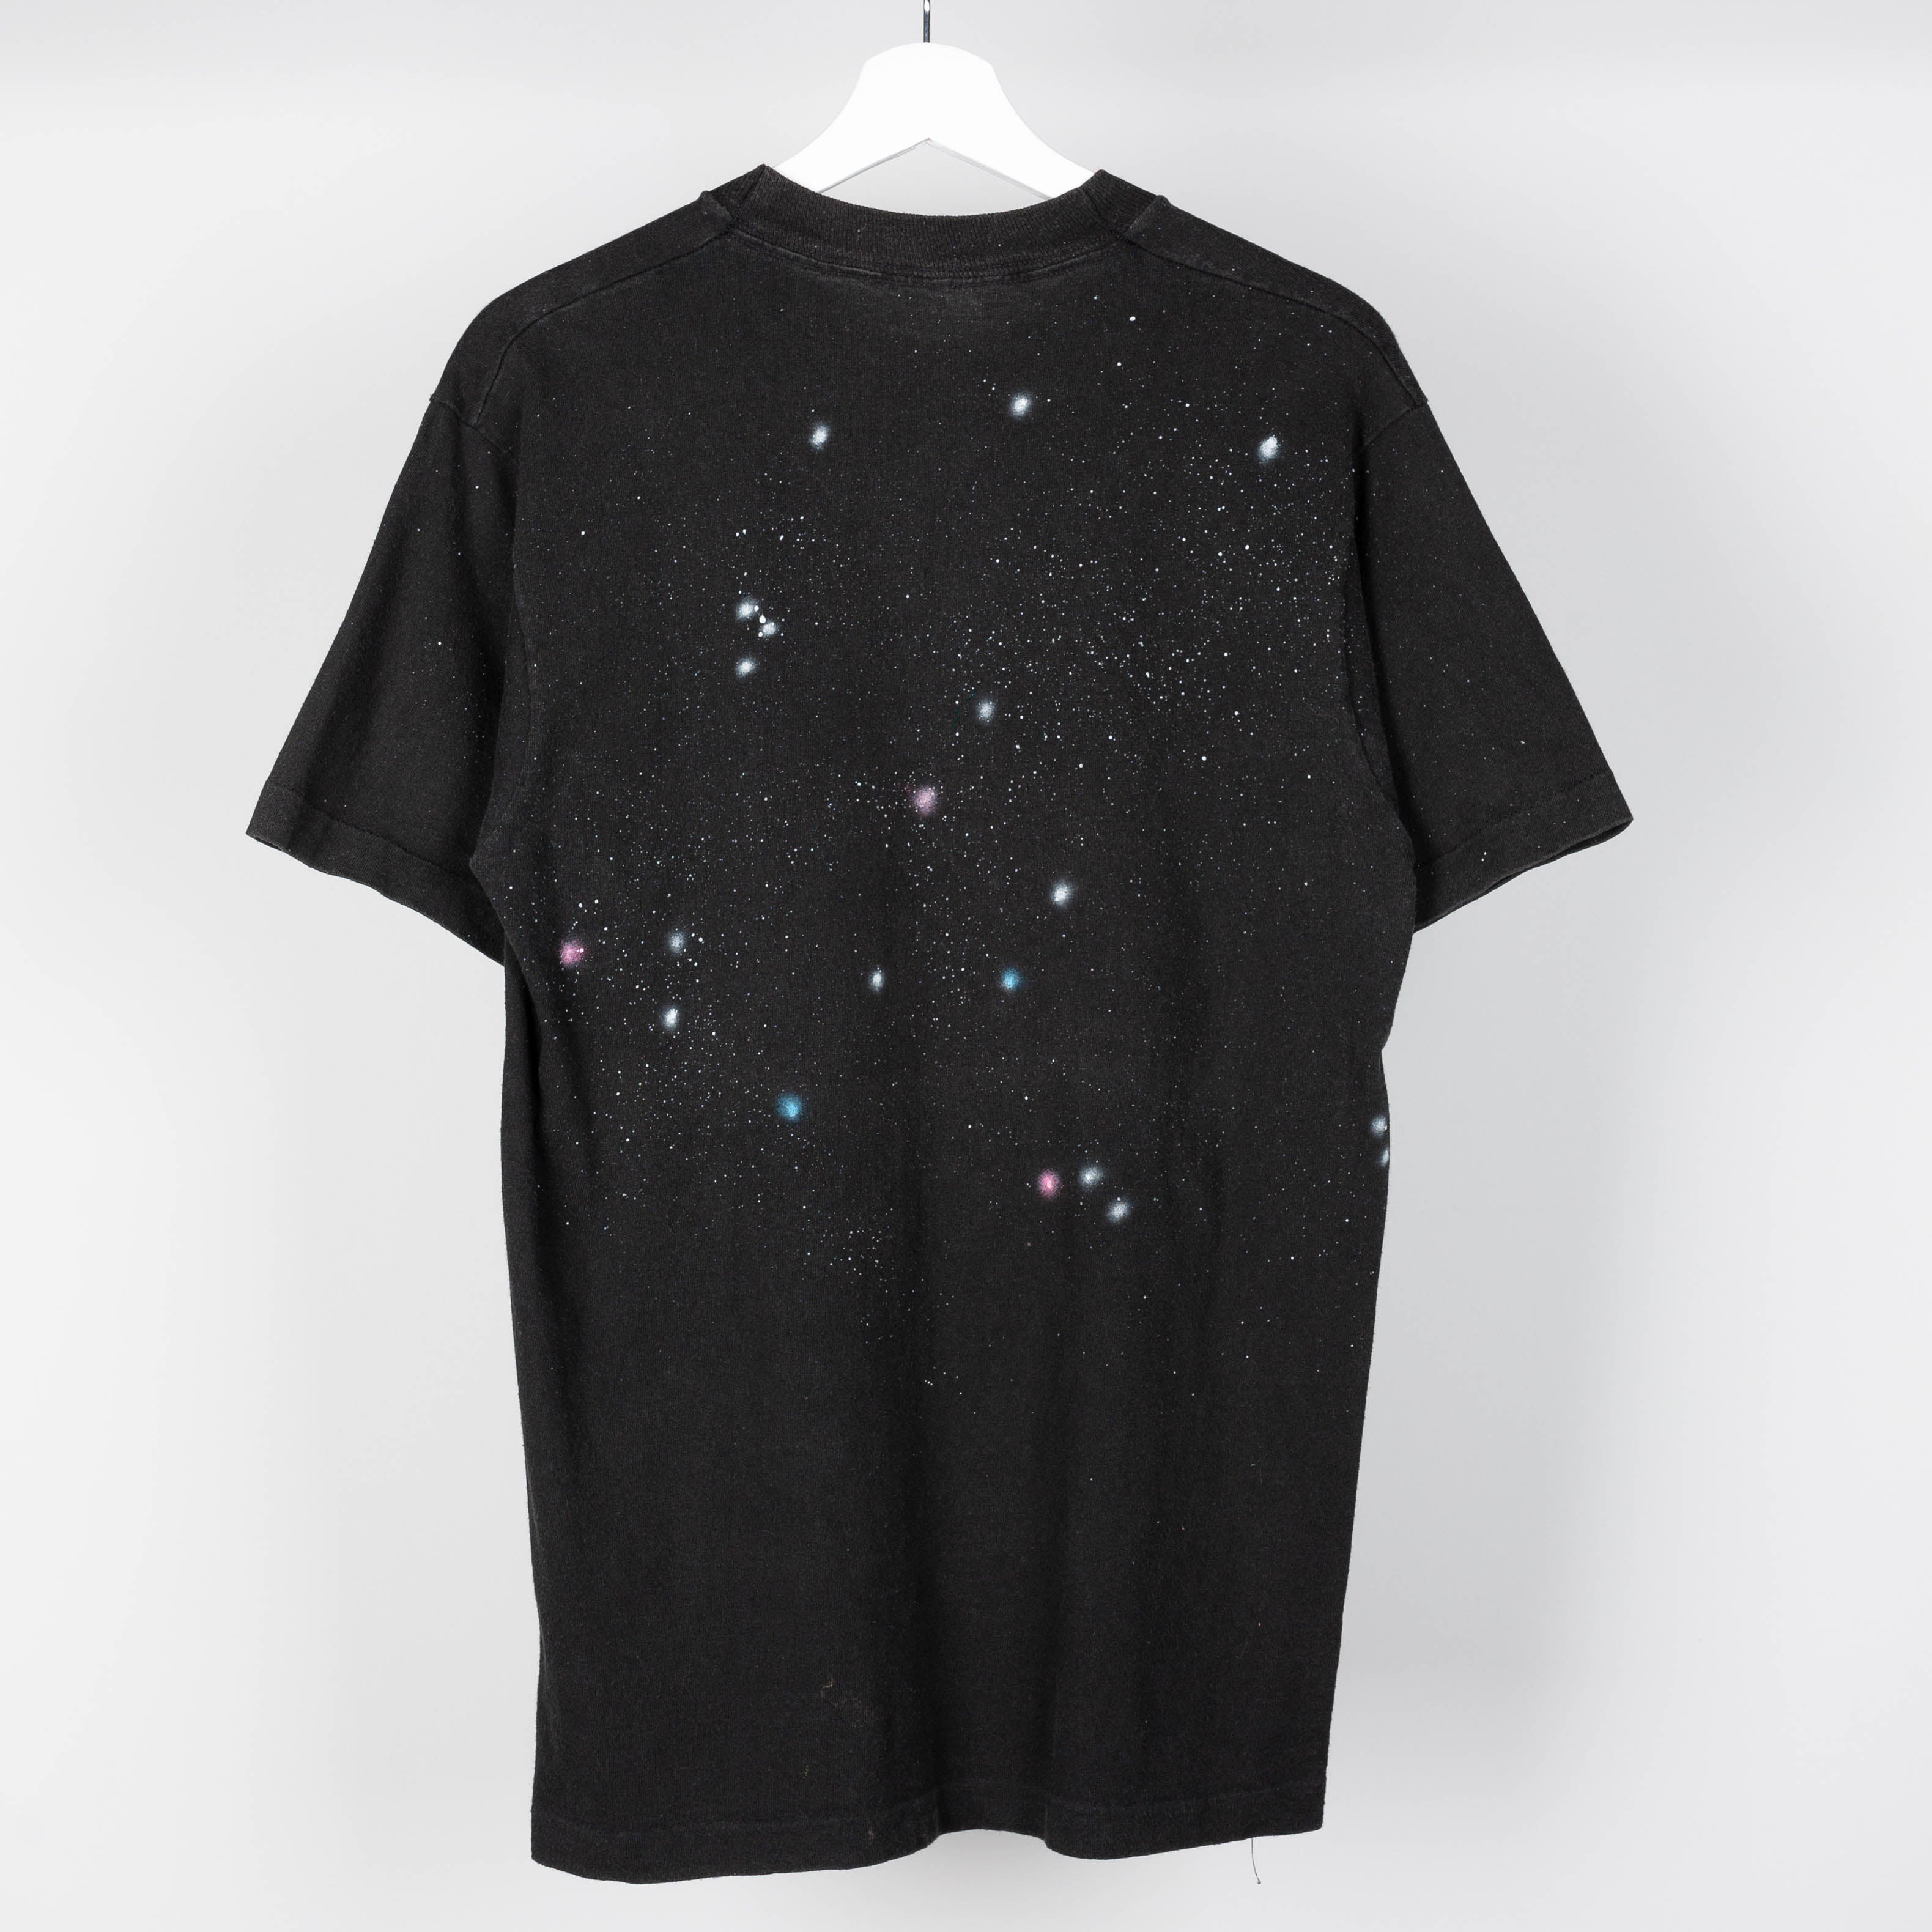 1990 NASA Hubble Space Telescope T-Shirt Size M